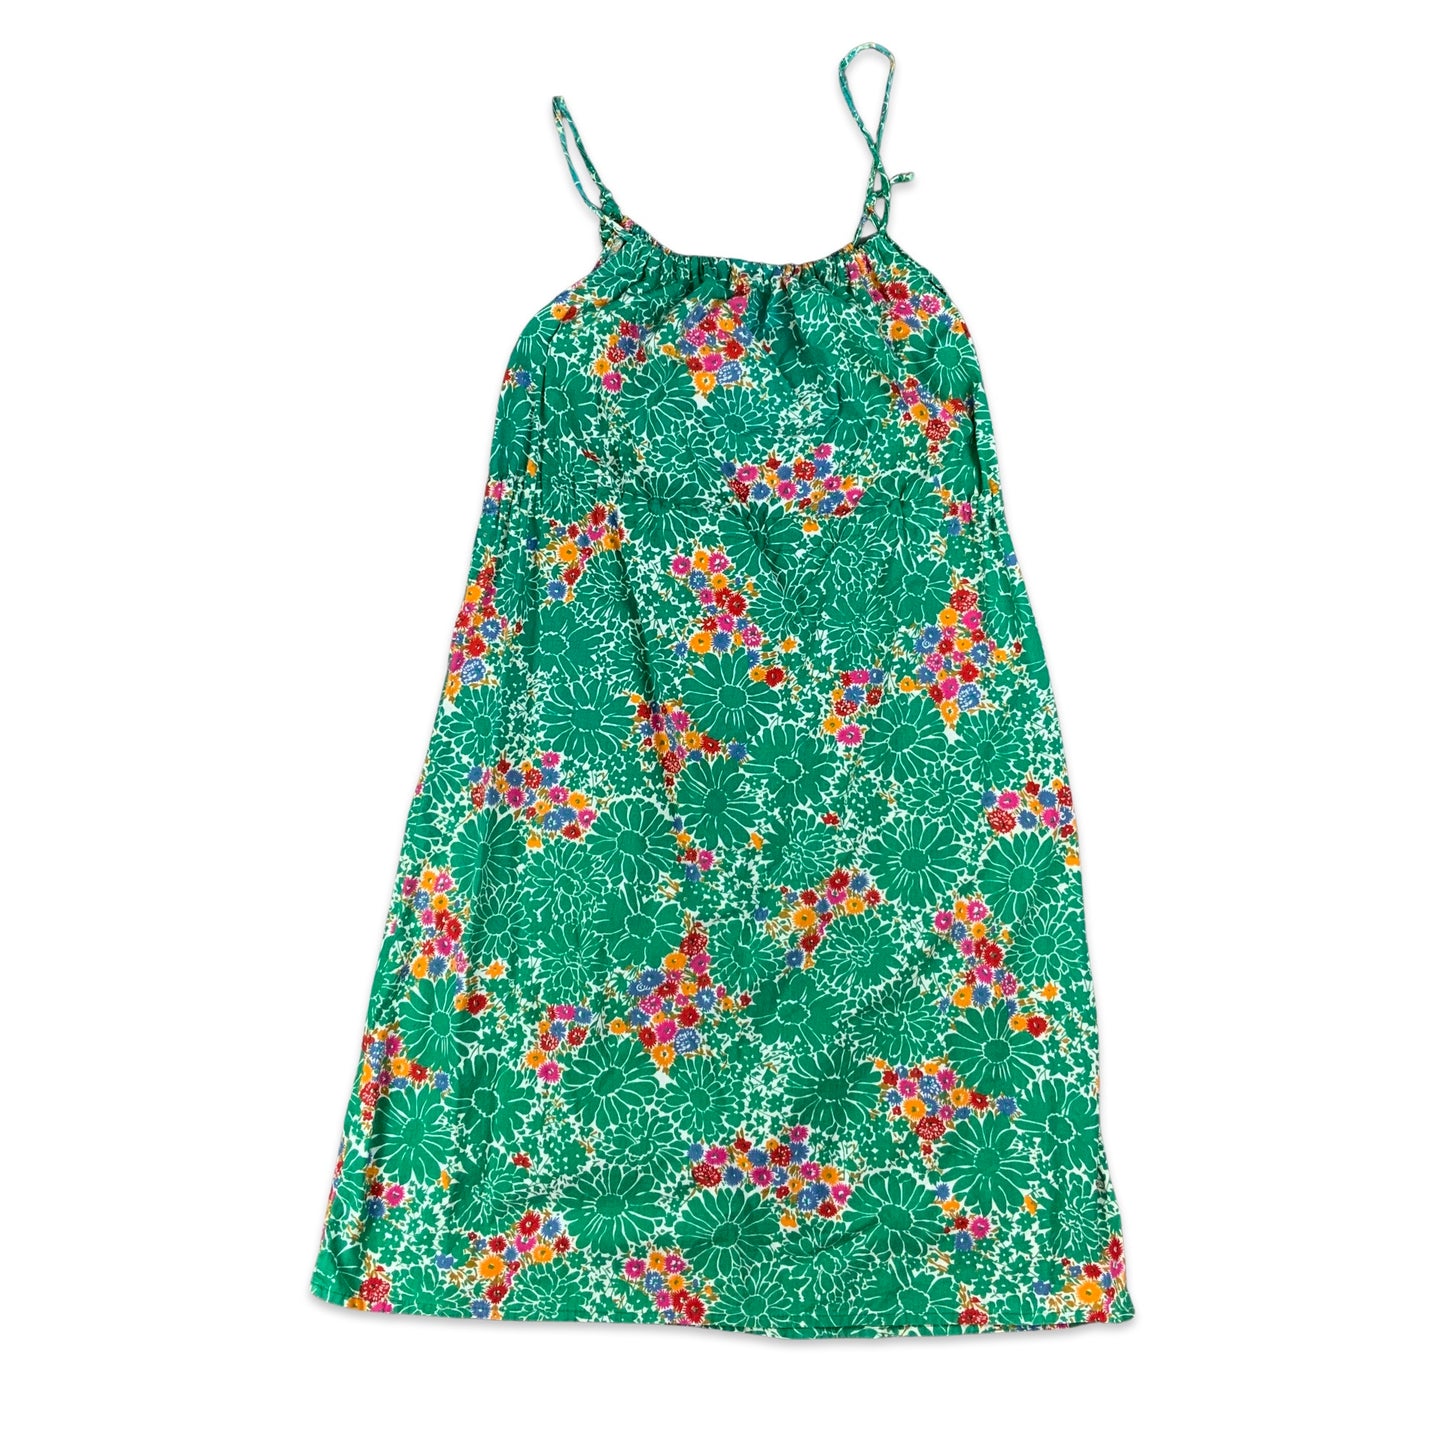 Vintage 70s Green Floral Summer Spaghetti Strap Dress 12 14